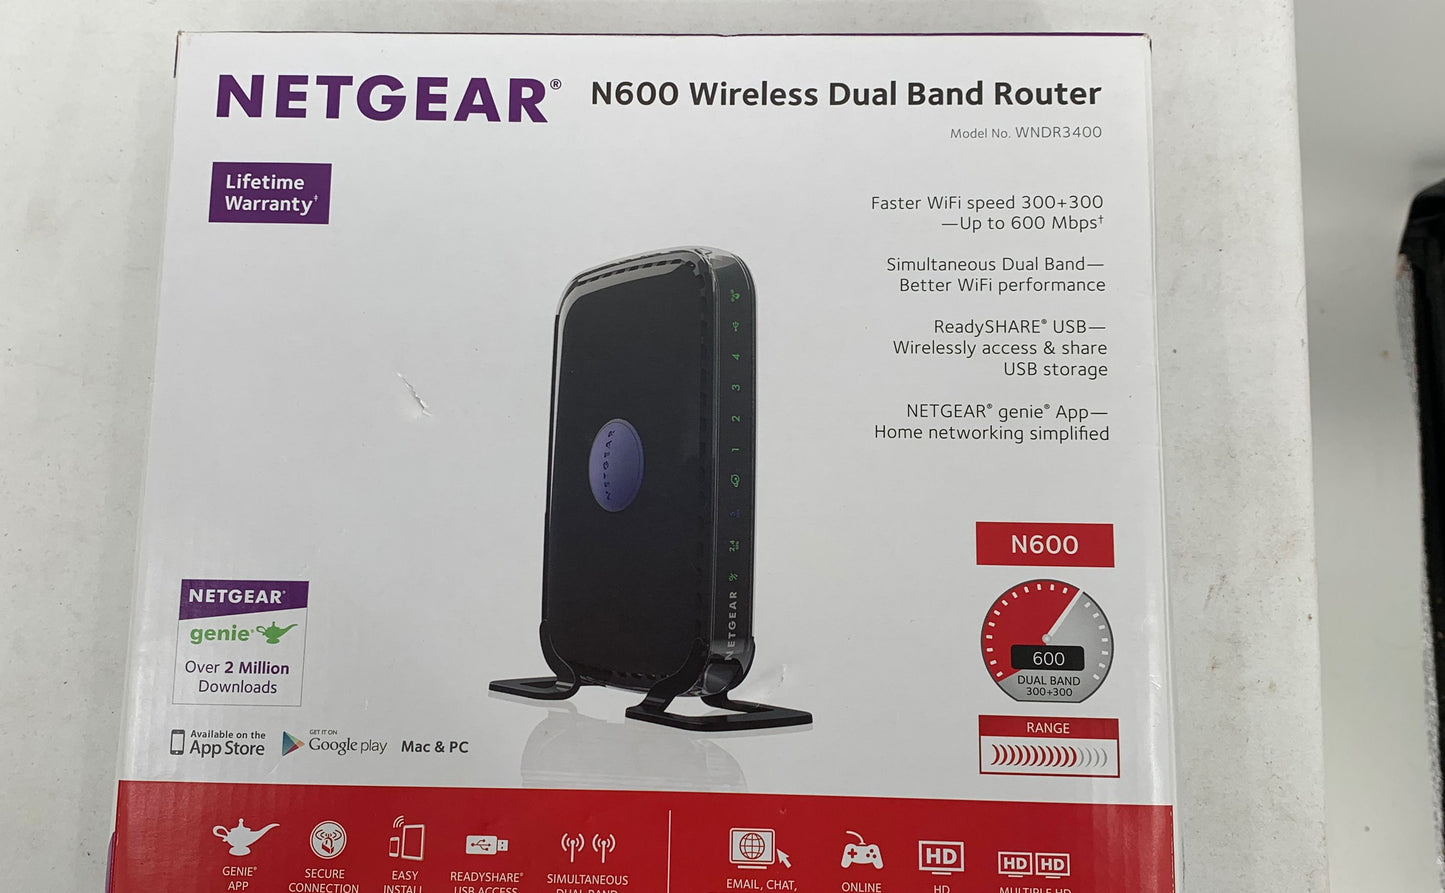 Netgear WNDR3400 N600 Wireless Dual Band Router